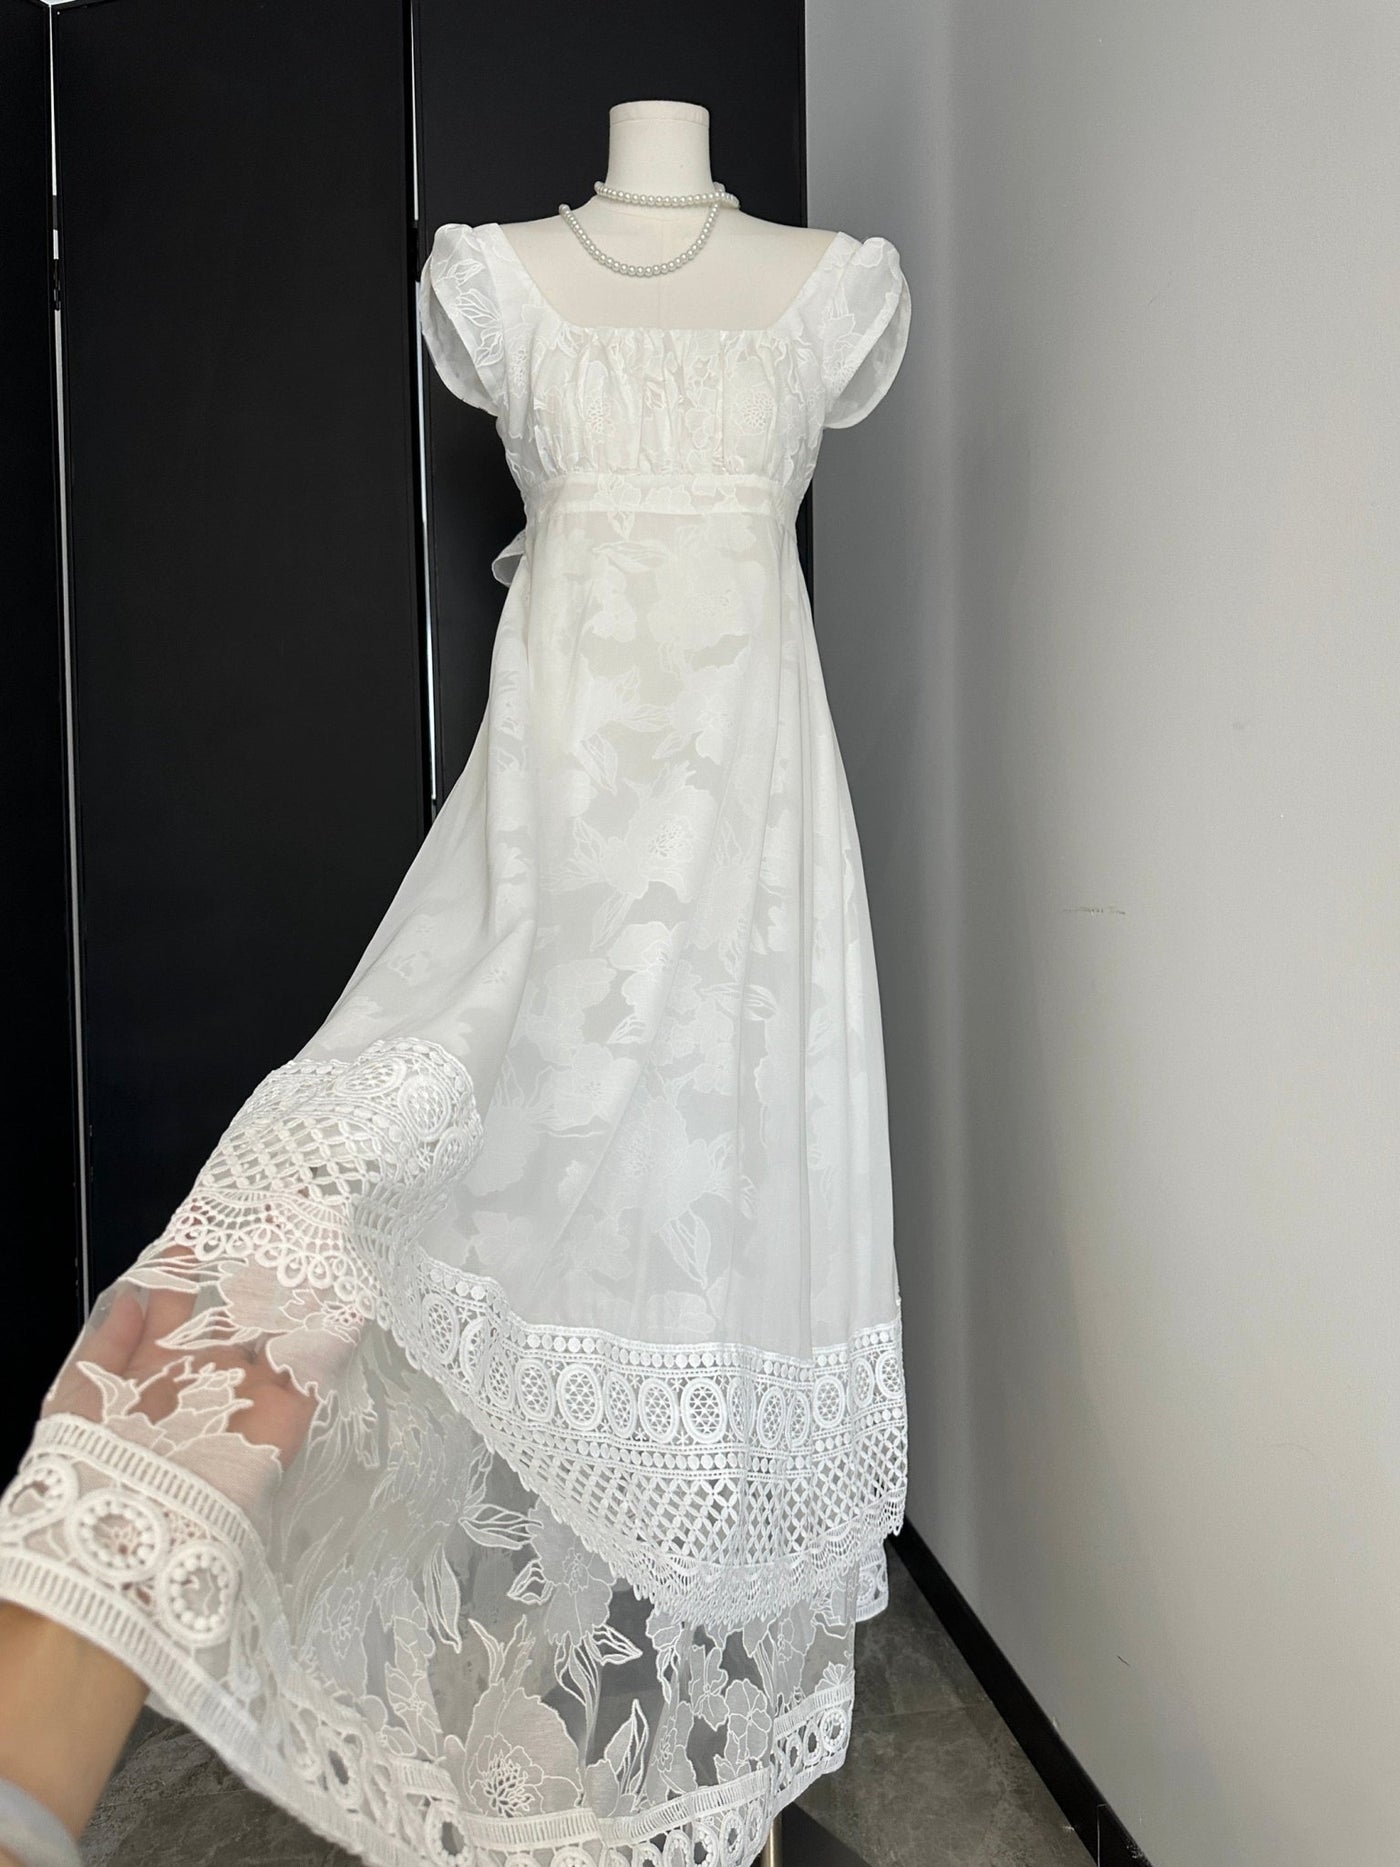 Bridgerton Inspired White Regency Era Dress with Lace - Custom Made Regency Dress with Bow Plus Size - WonderlandByLilian